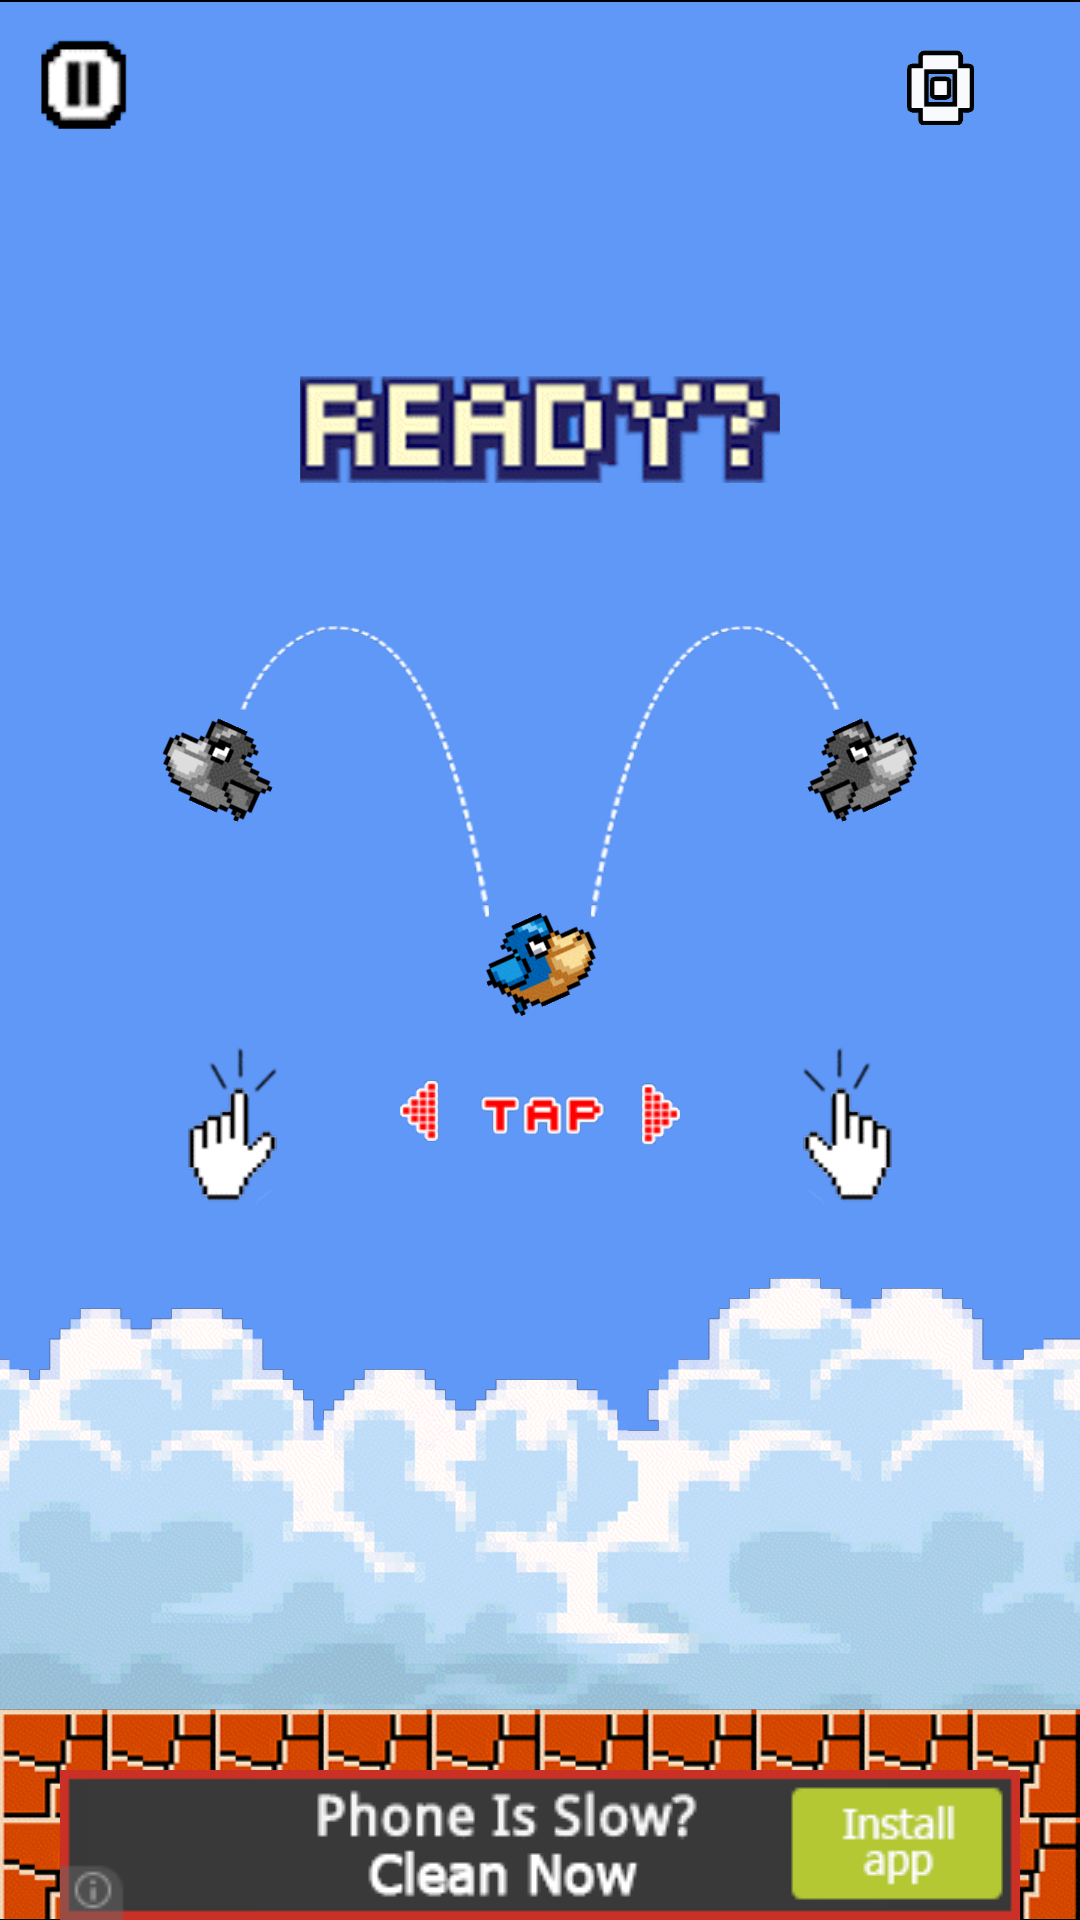 Flappy Bird tiếp tục bị "lai giống" với Mario trong game Việt Wing Up 2